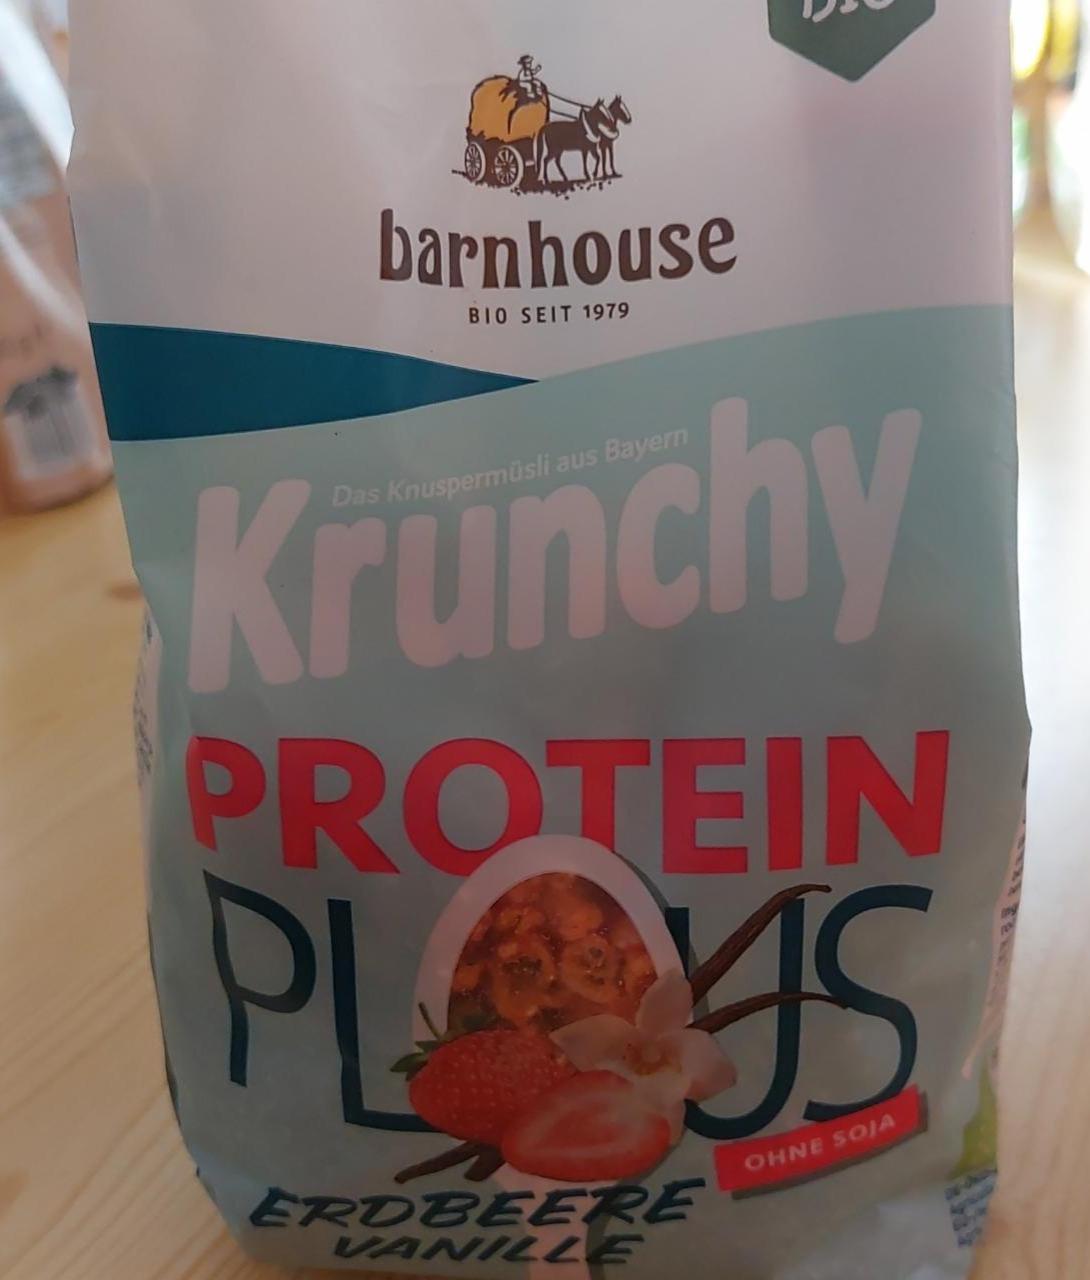 Fotografie - Krunchy Protein Plus Erbdeere Vanille Barnhouse